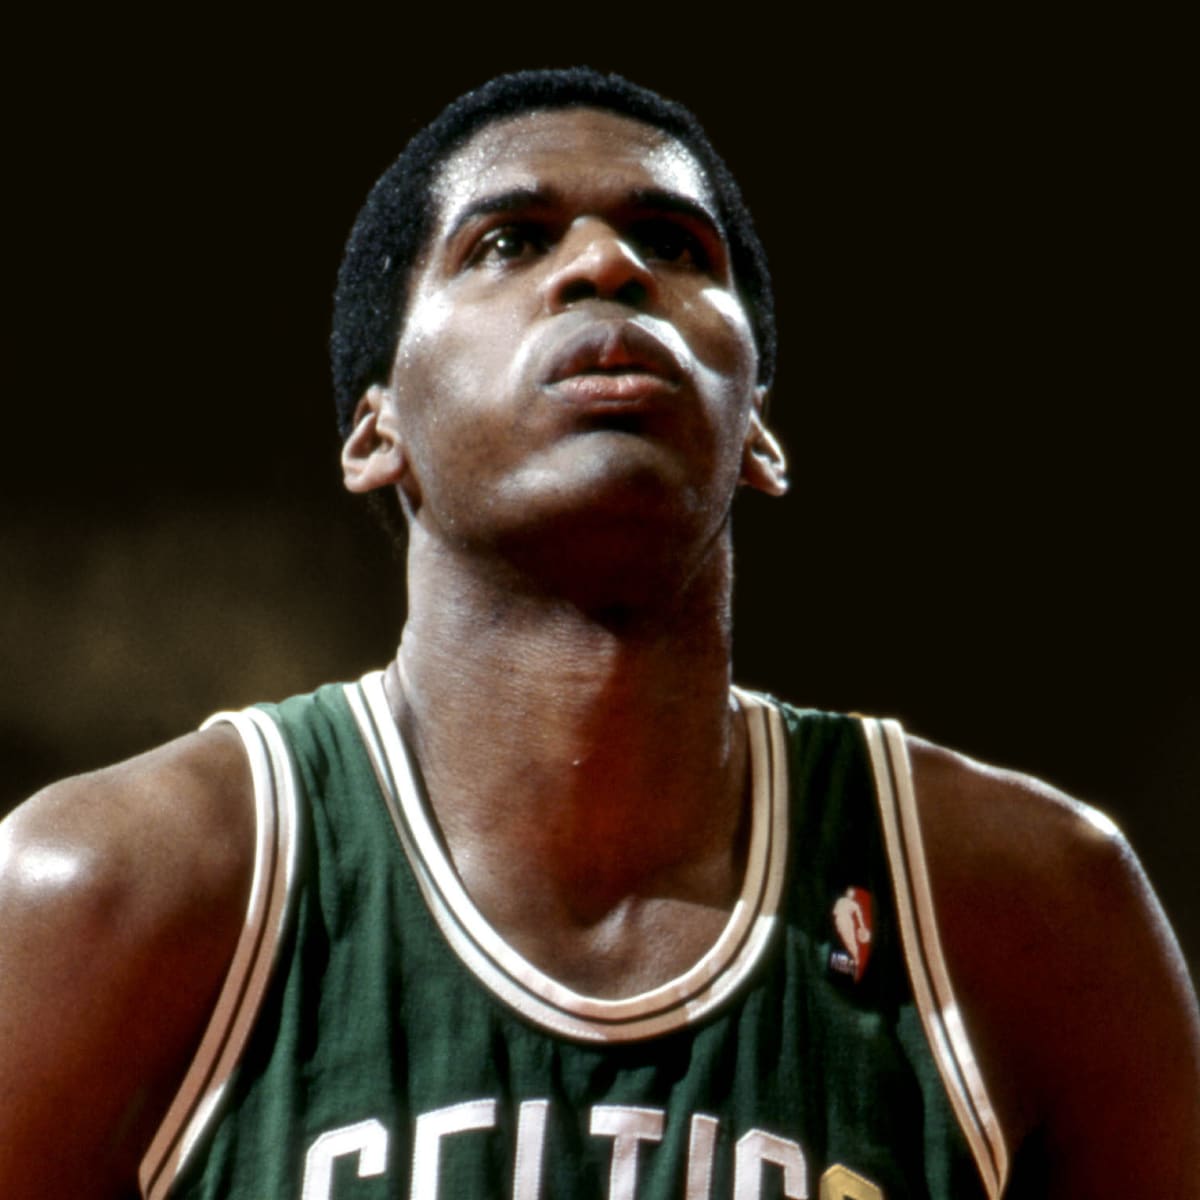 Boston Celtics Jersey worn by Bob Cousy